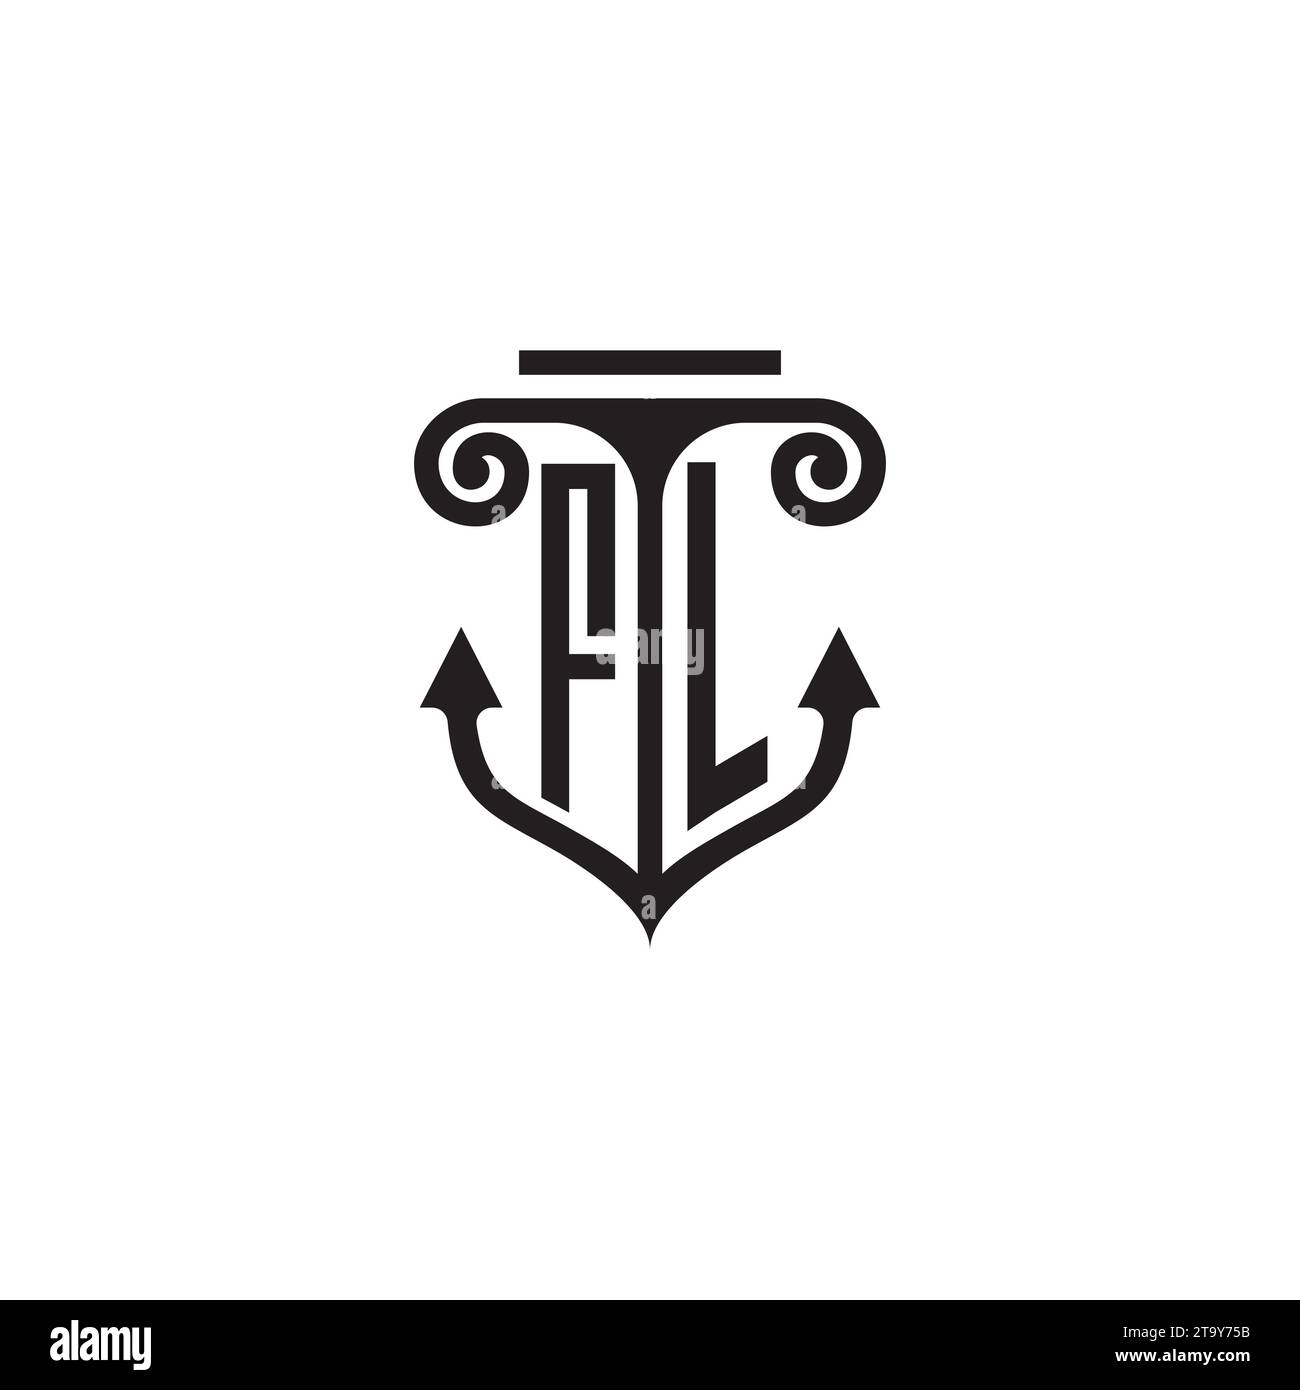 FL pillar and anchor combination concept logo in high quality design Stock Vector